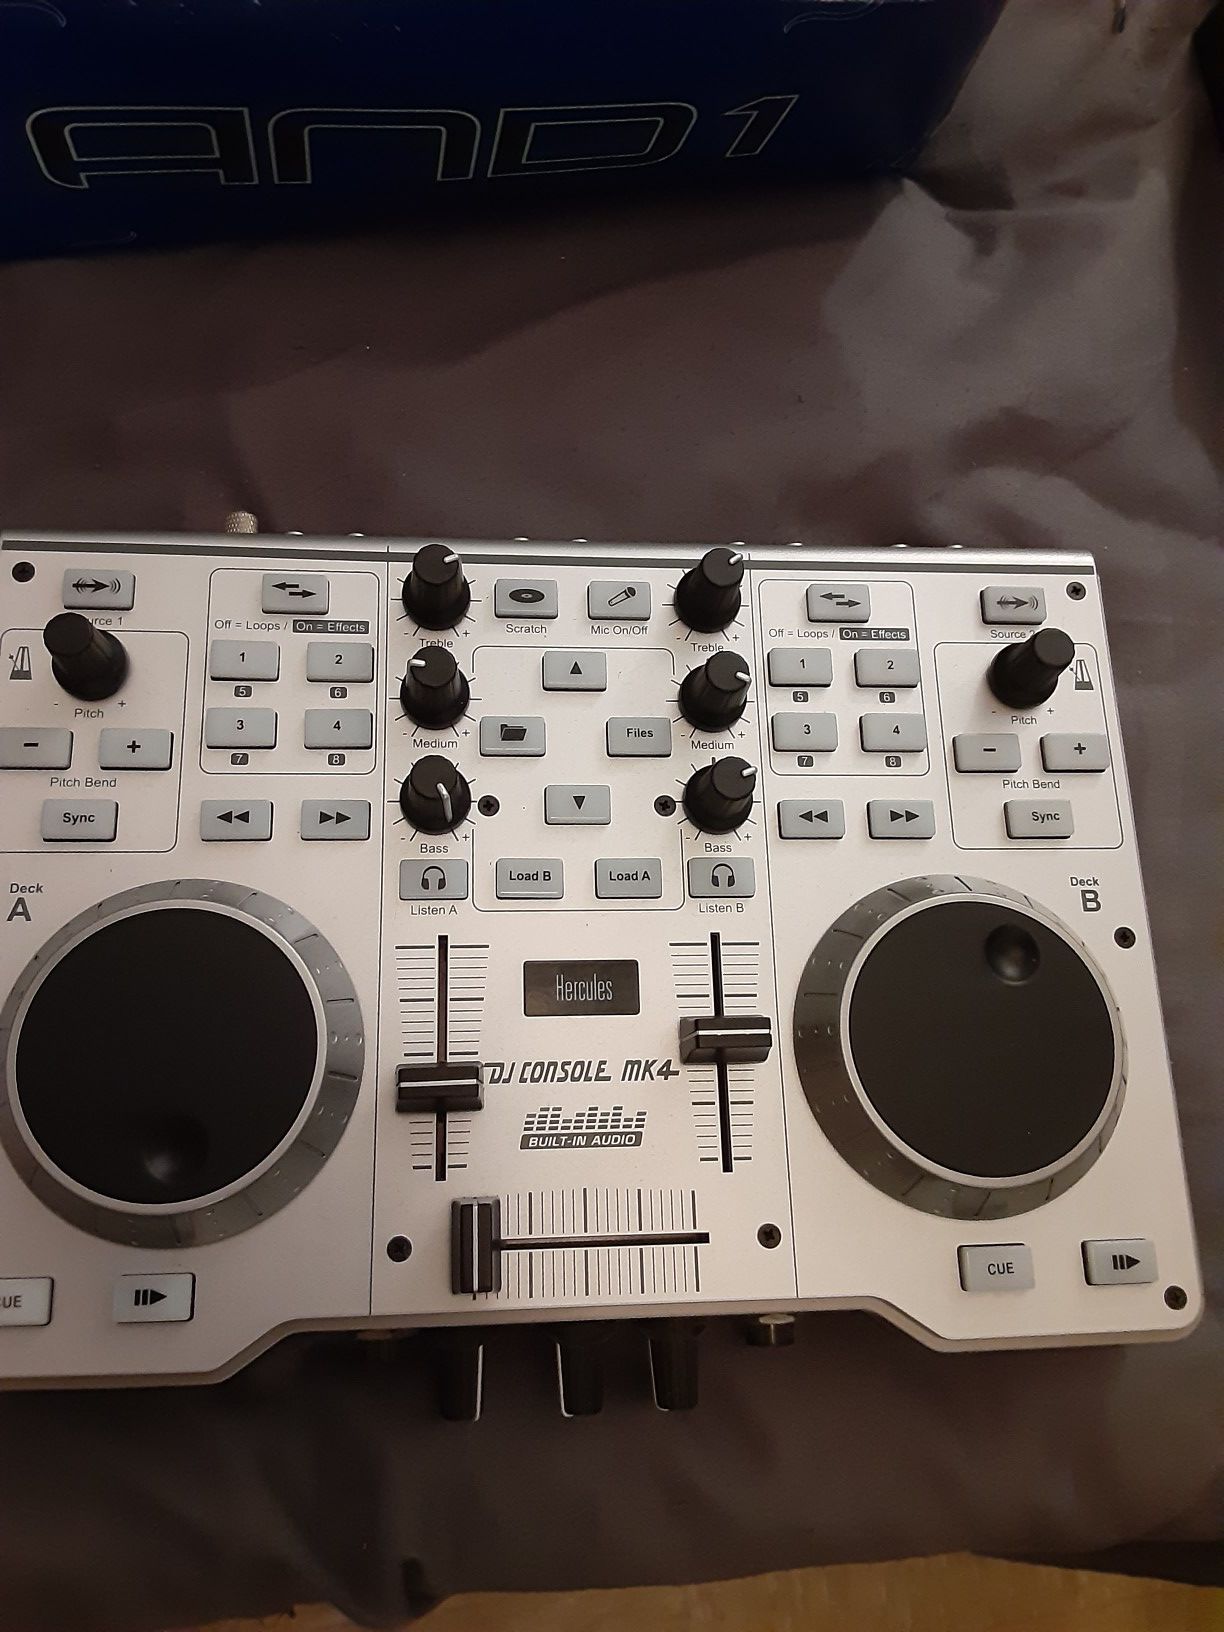 DJ console mk4